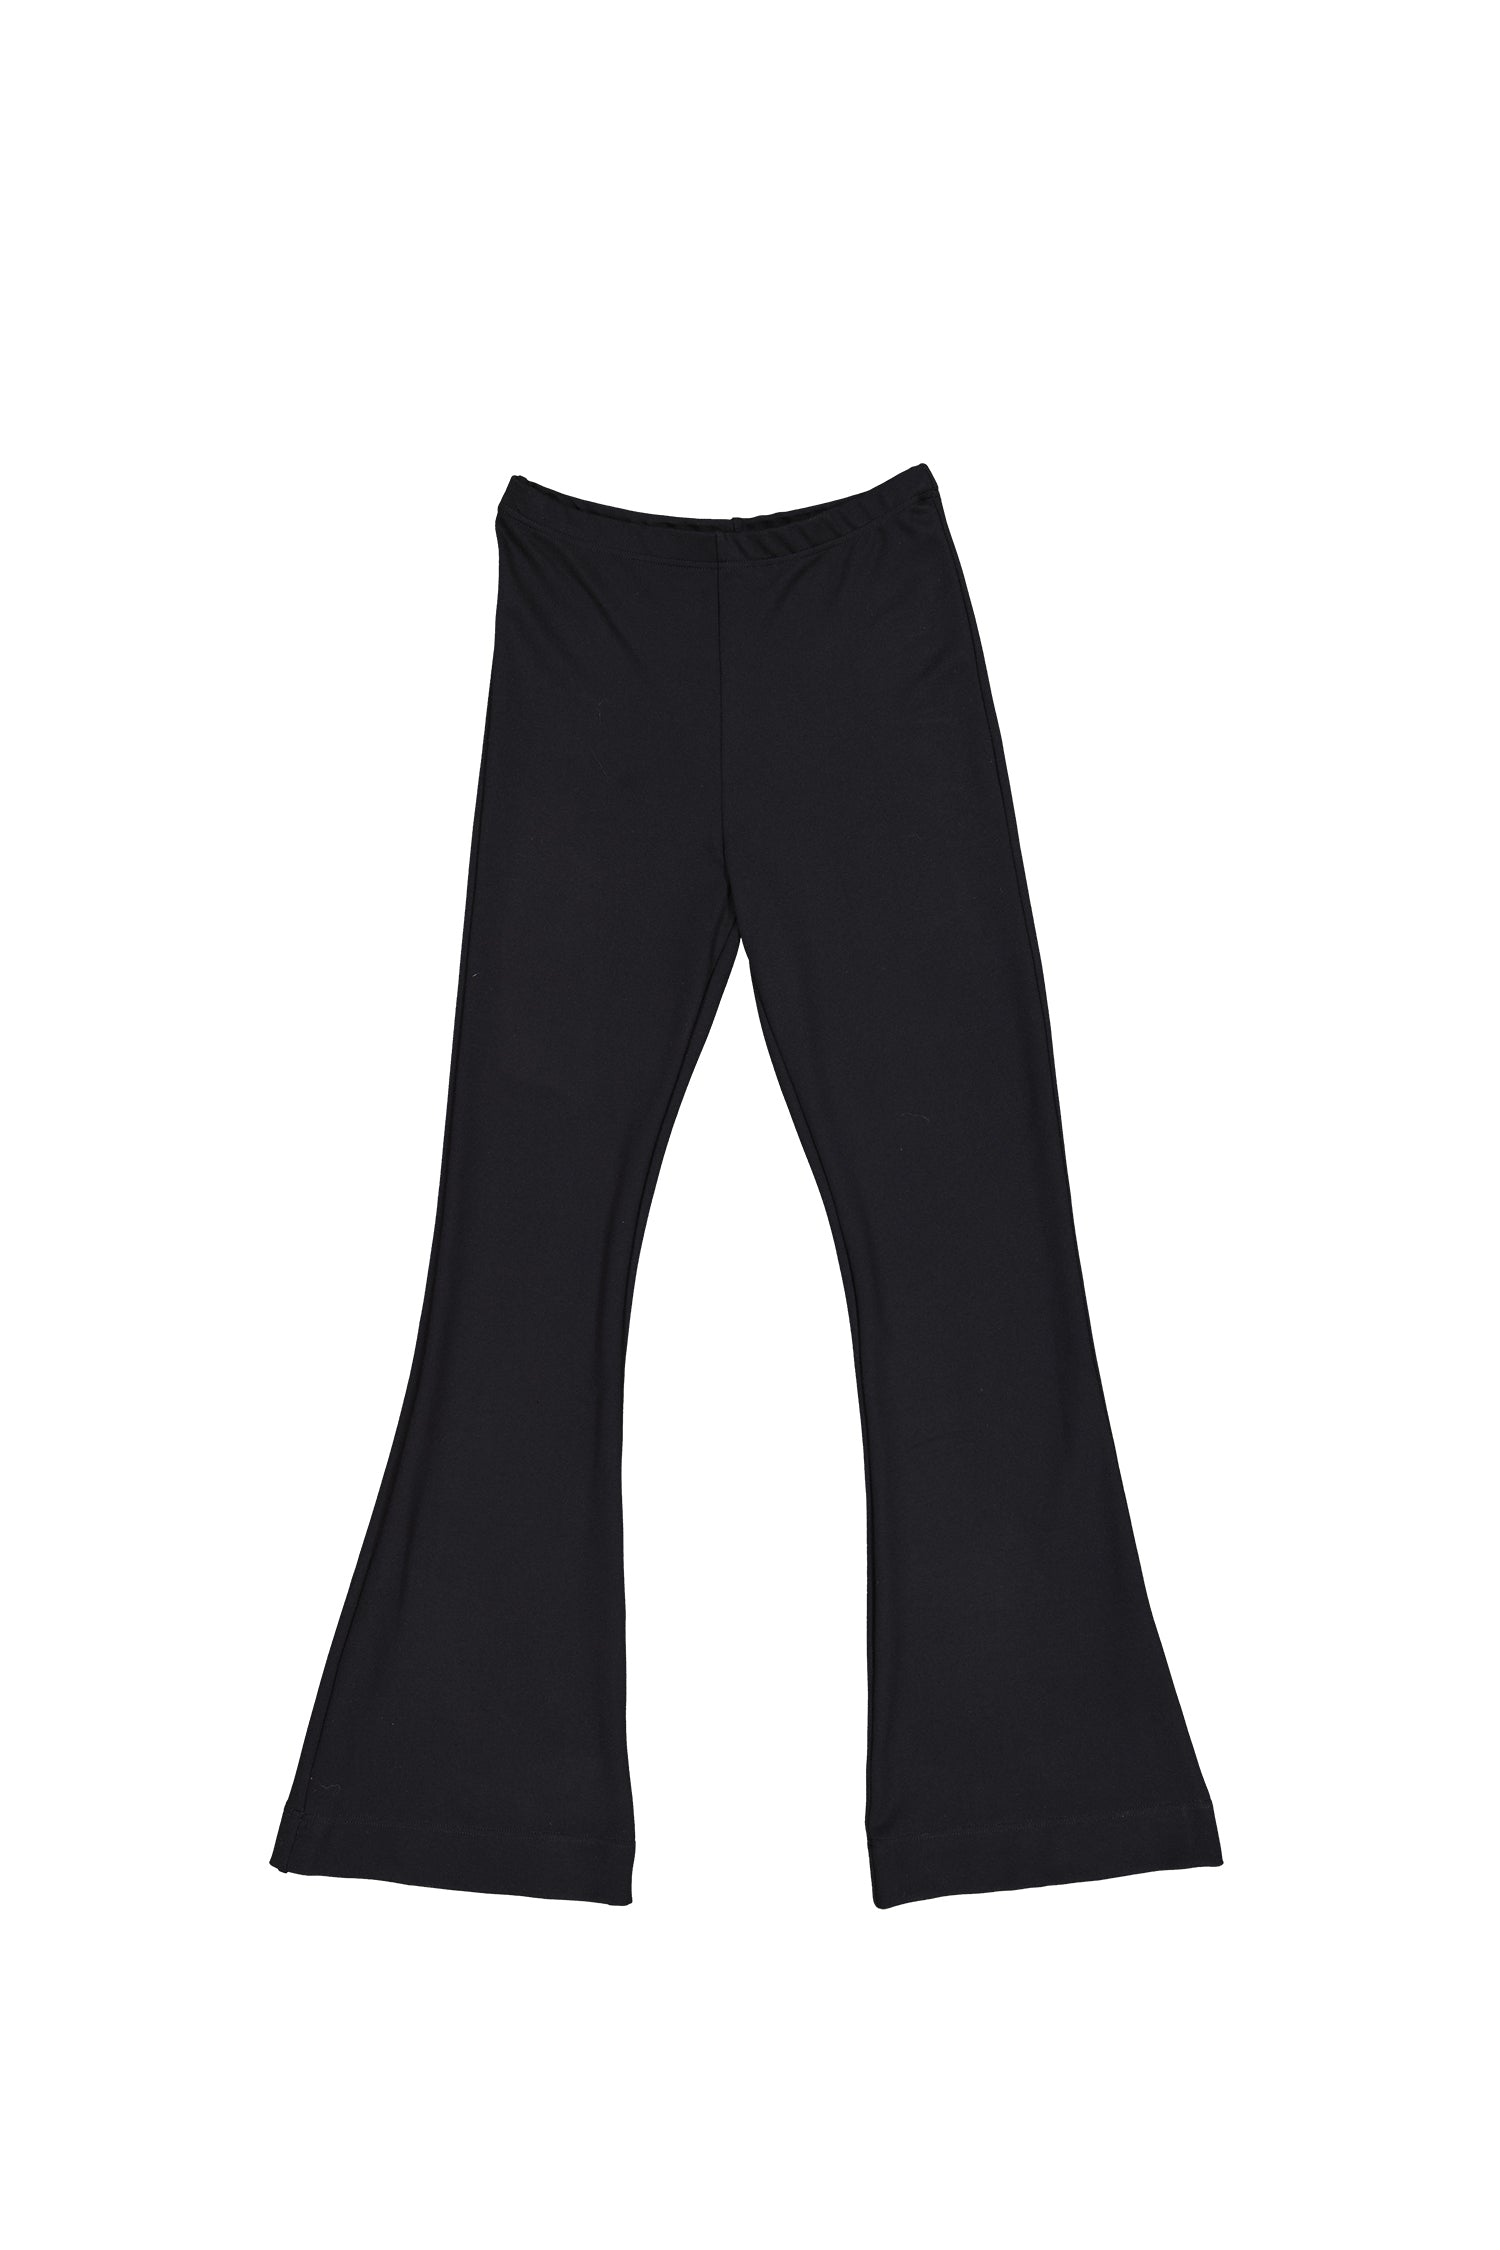 Sport Savvy Womens Petite Pants 1XP French Terry Bootcut Pant w Blue  A568039  Phoenix Trading Company